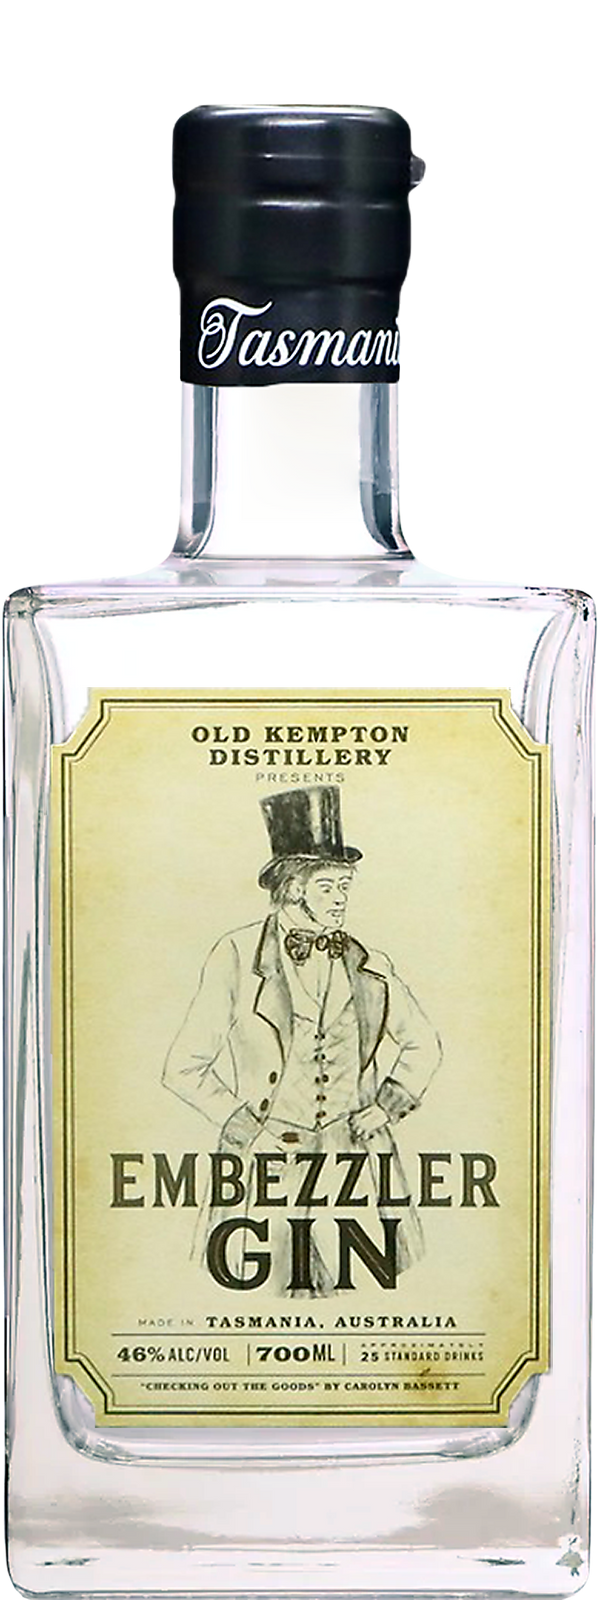 Old Kempton Embezzler Gin